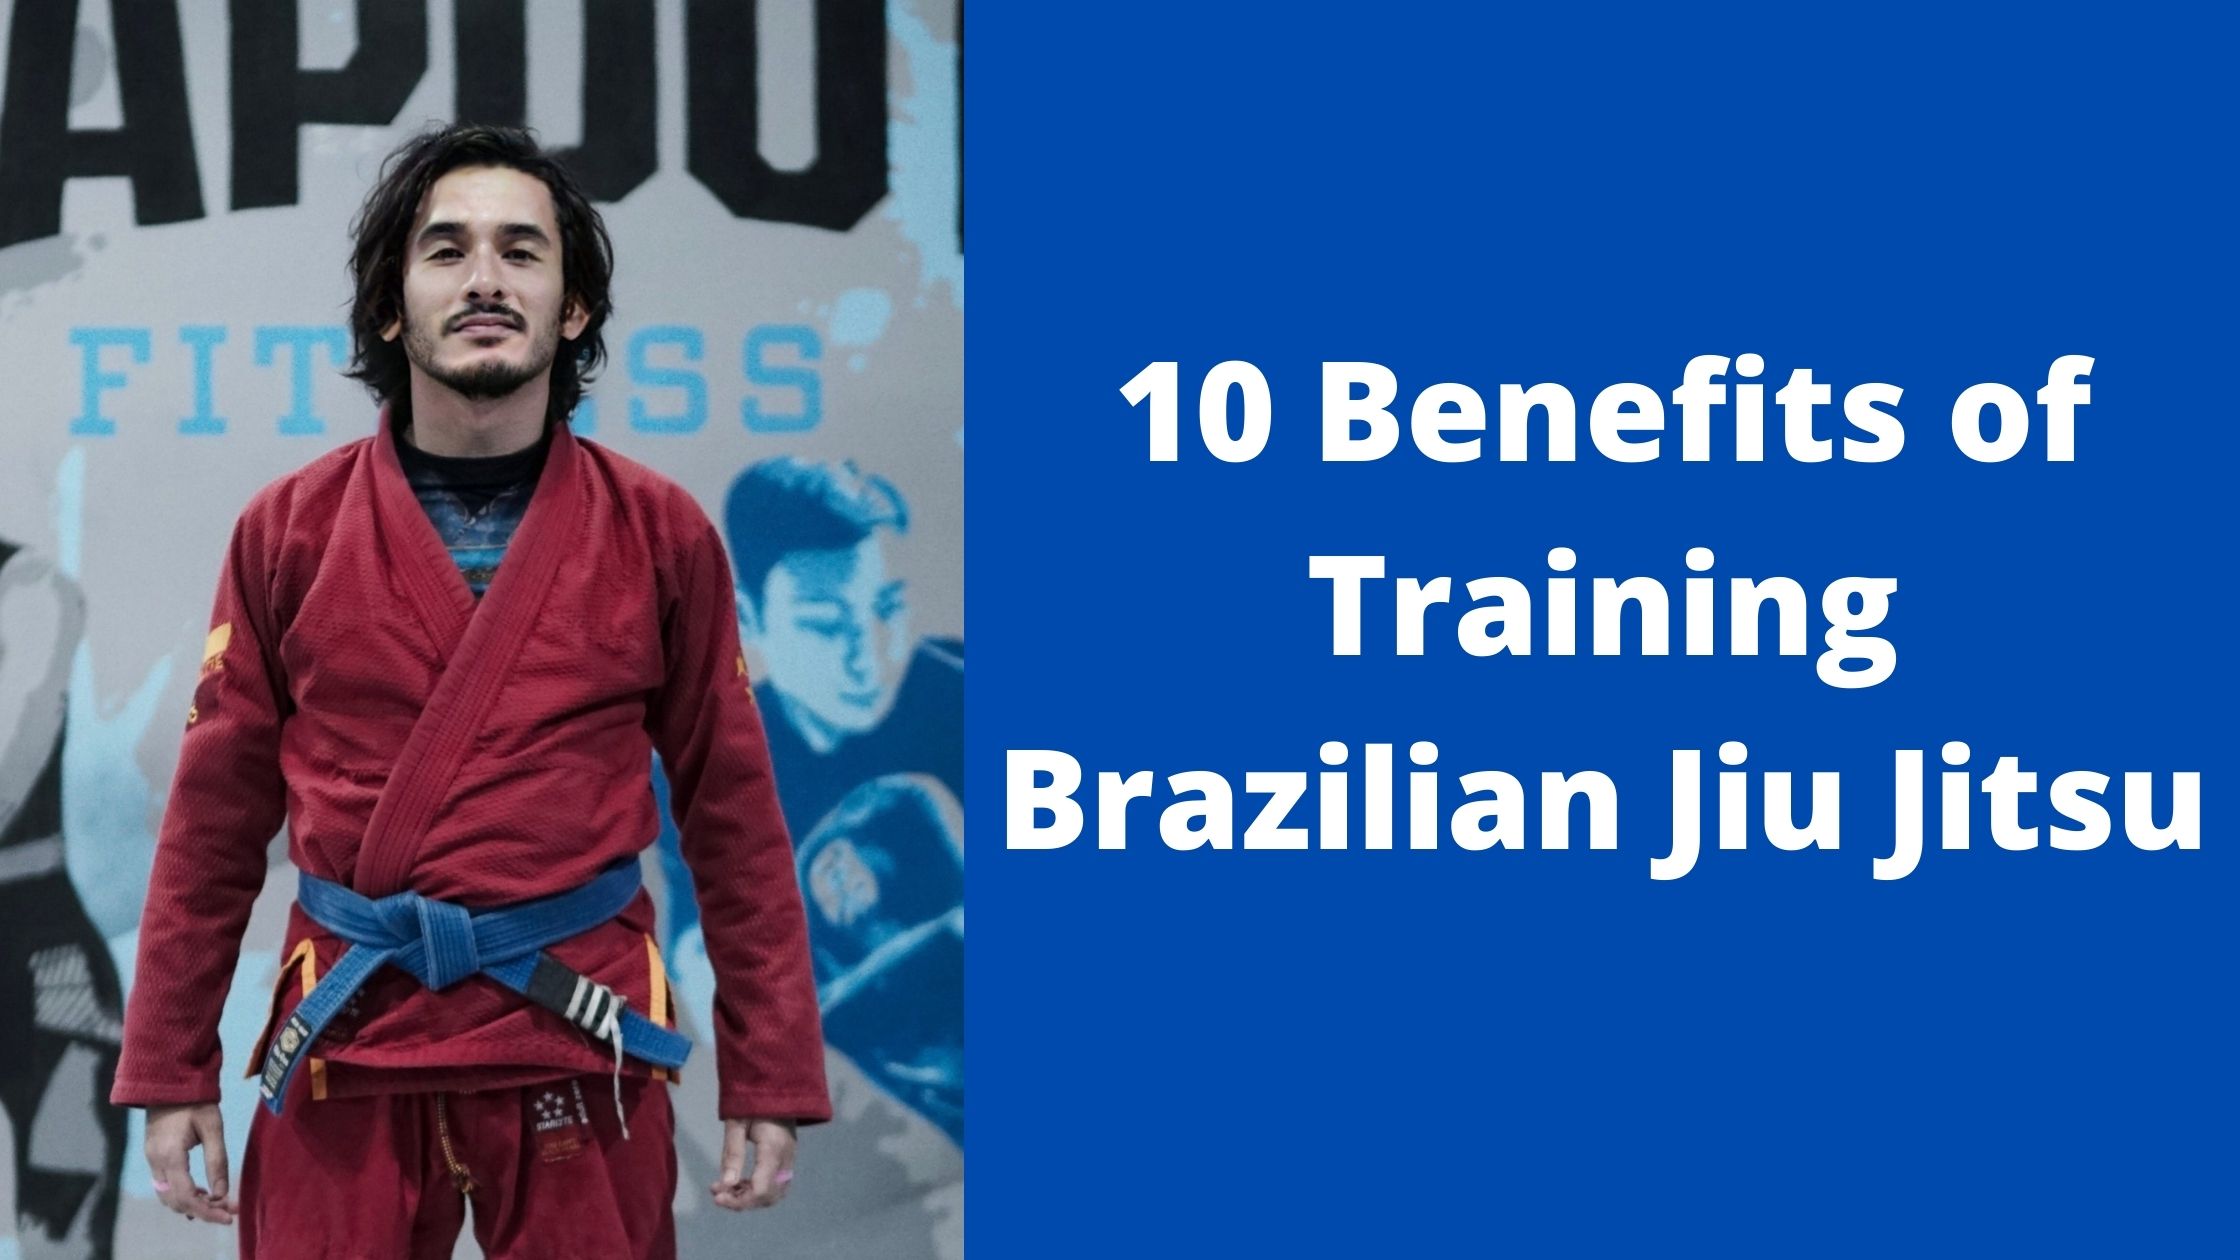 10 Benefits of Training Brazilian Jiu Jitsu: From Self-Defense to Weight Loss and Problem Solving